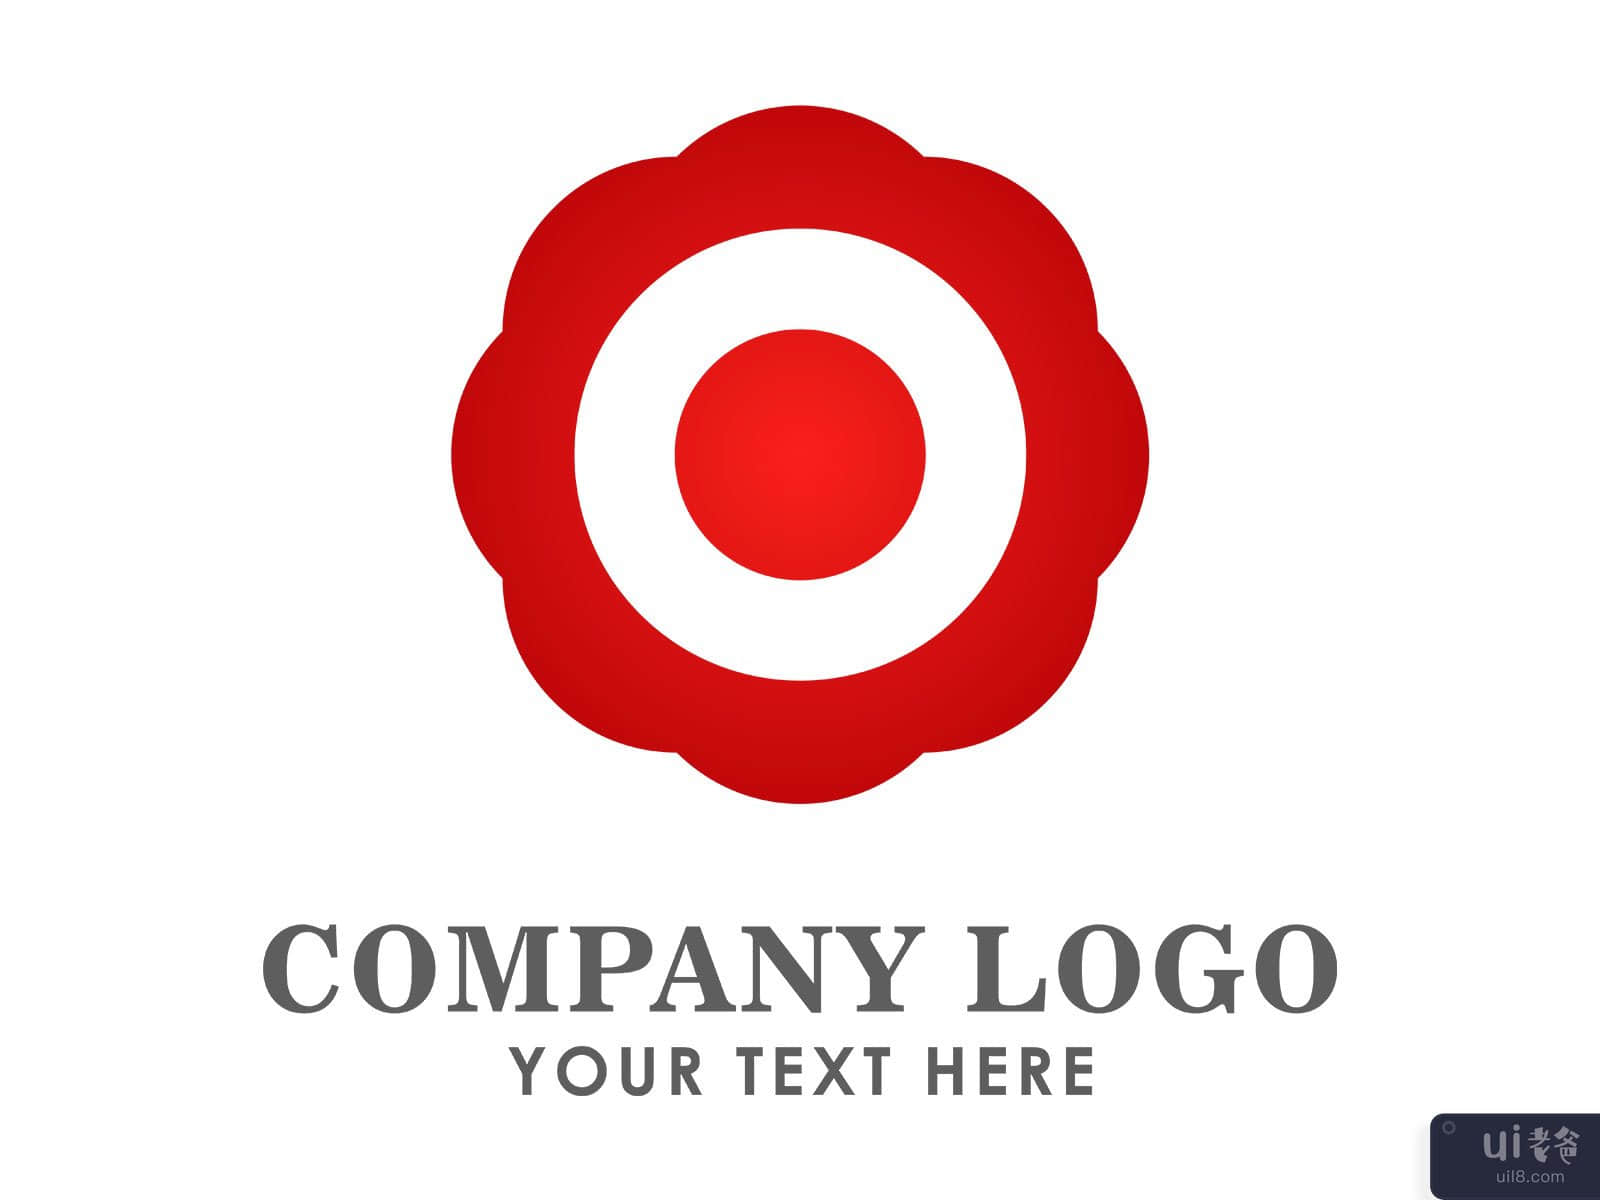 Company logo full color template